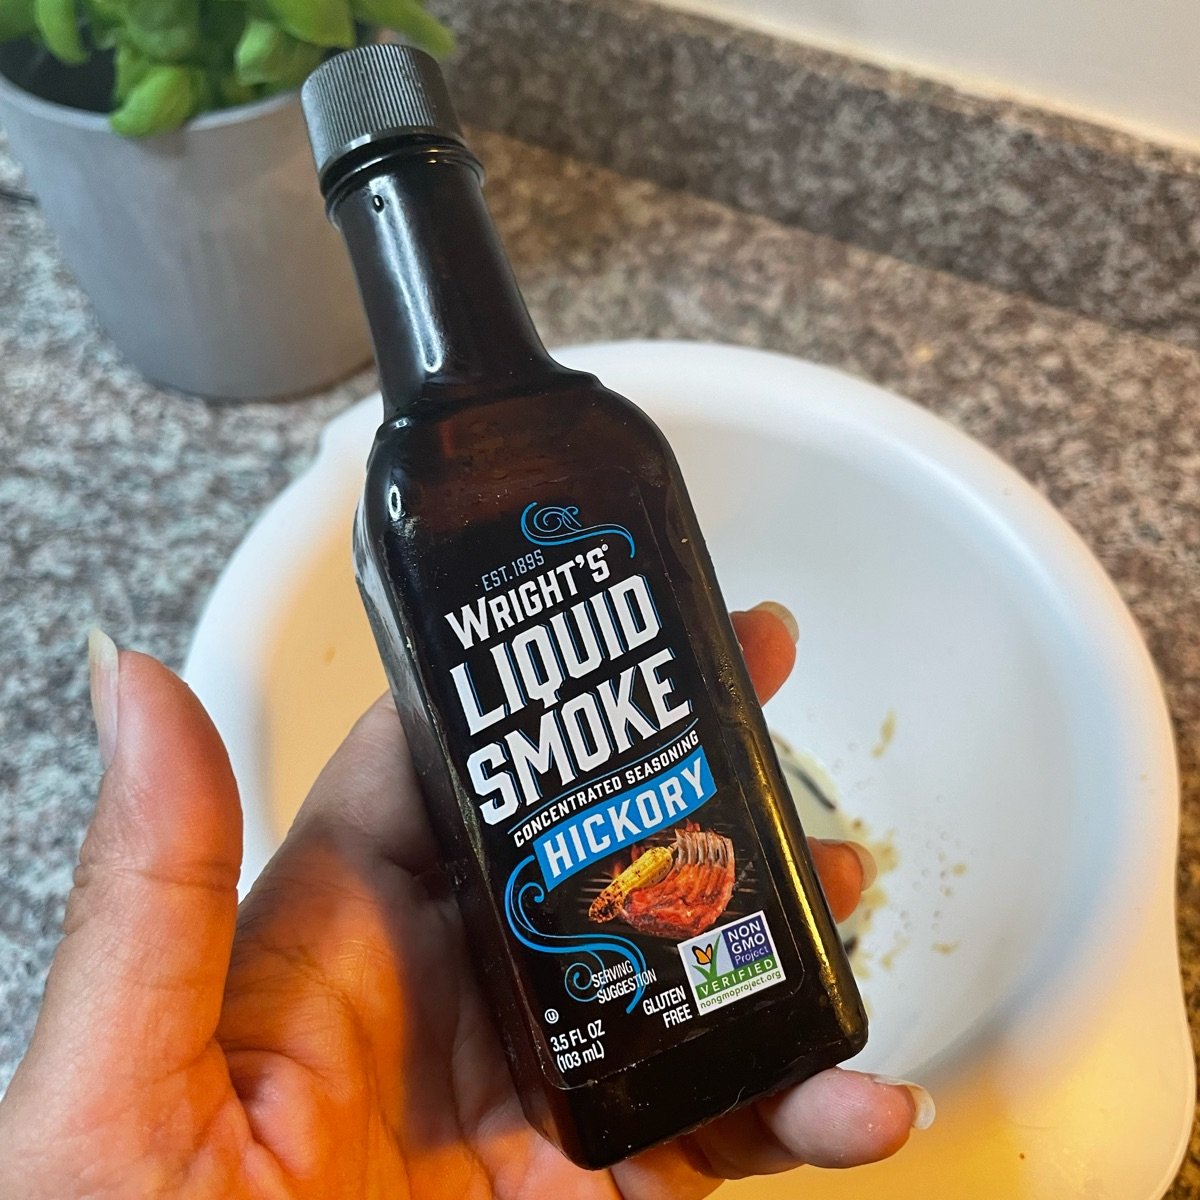 Wright's Liquid Smoke Hickory Seasoning